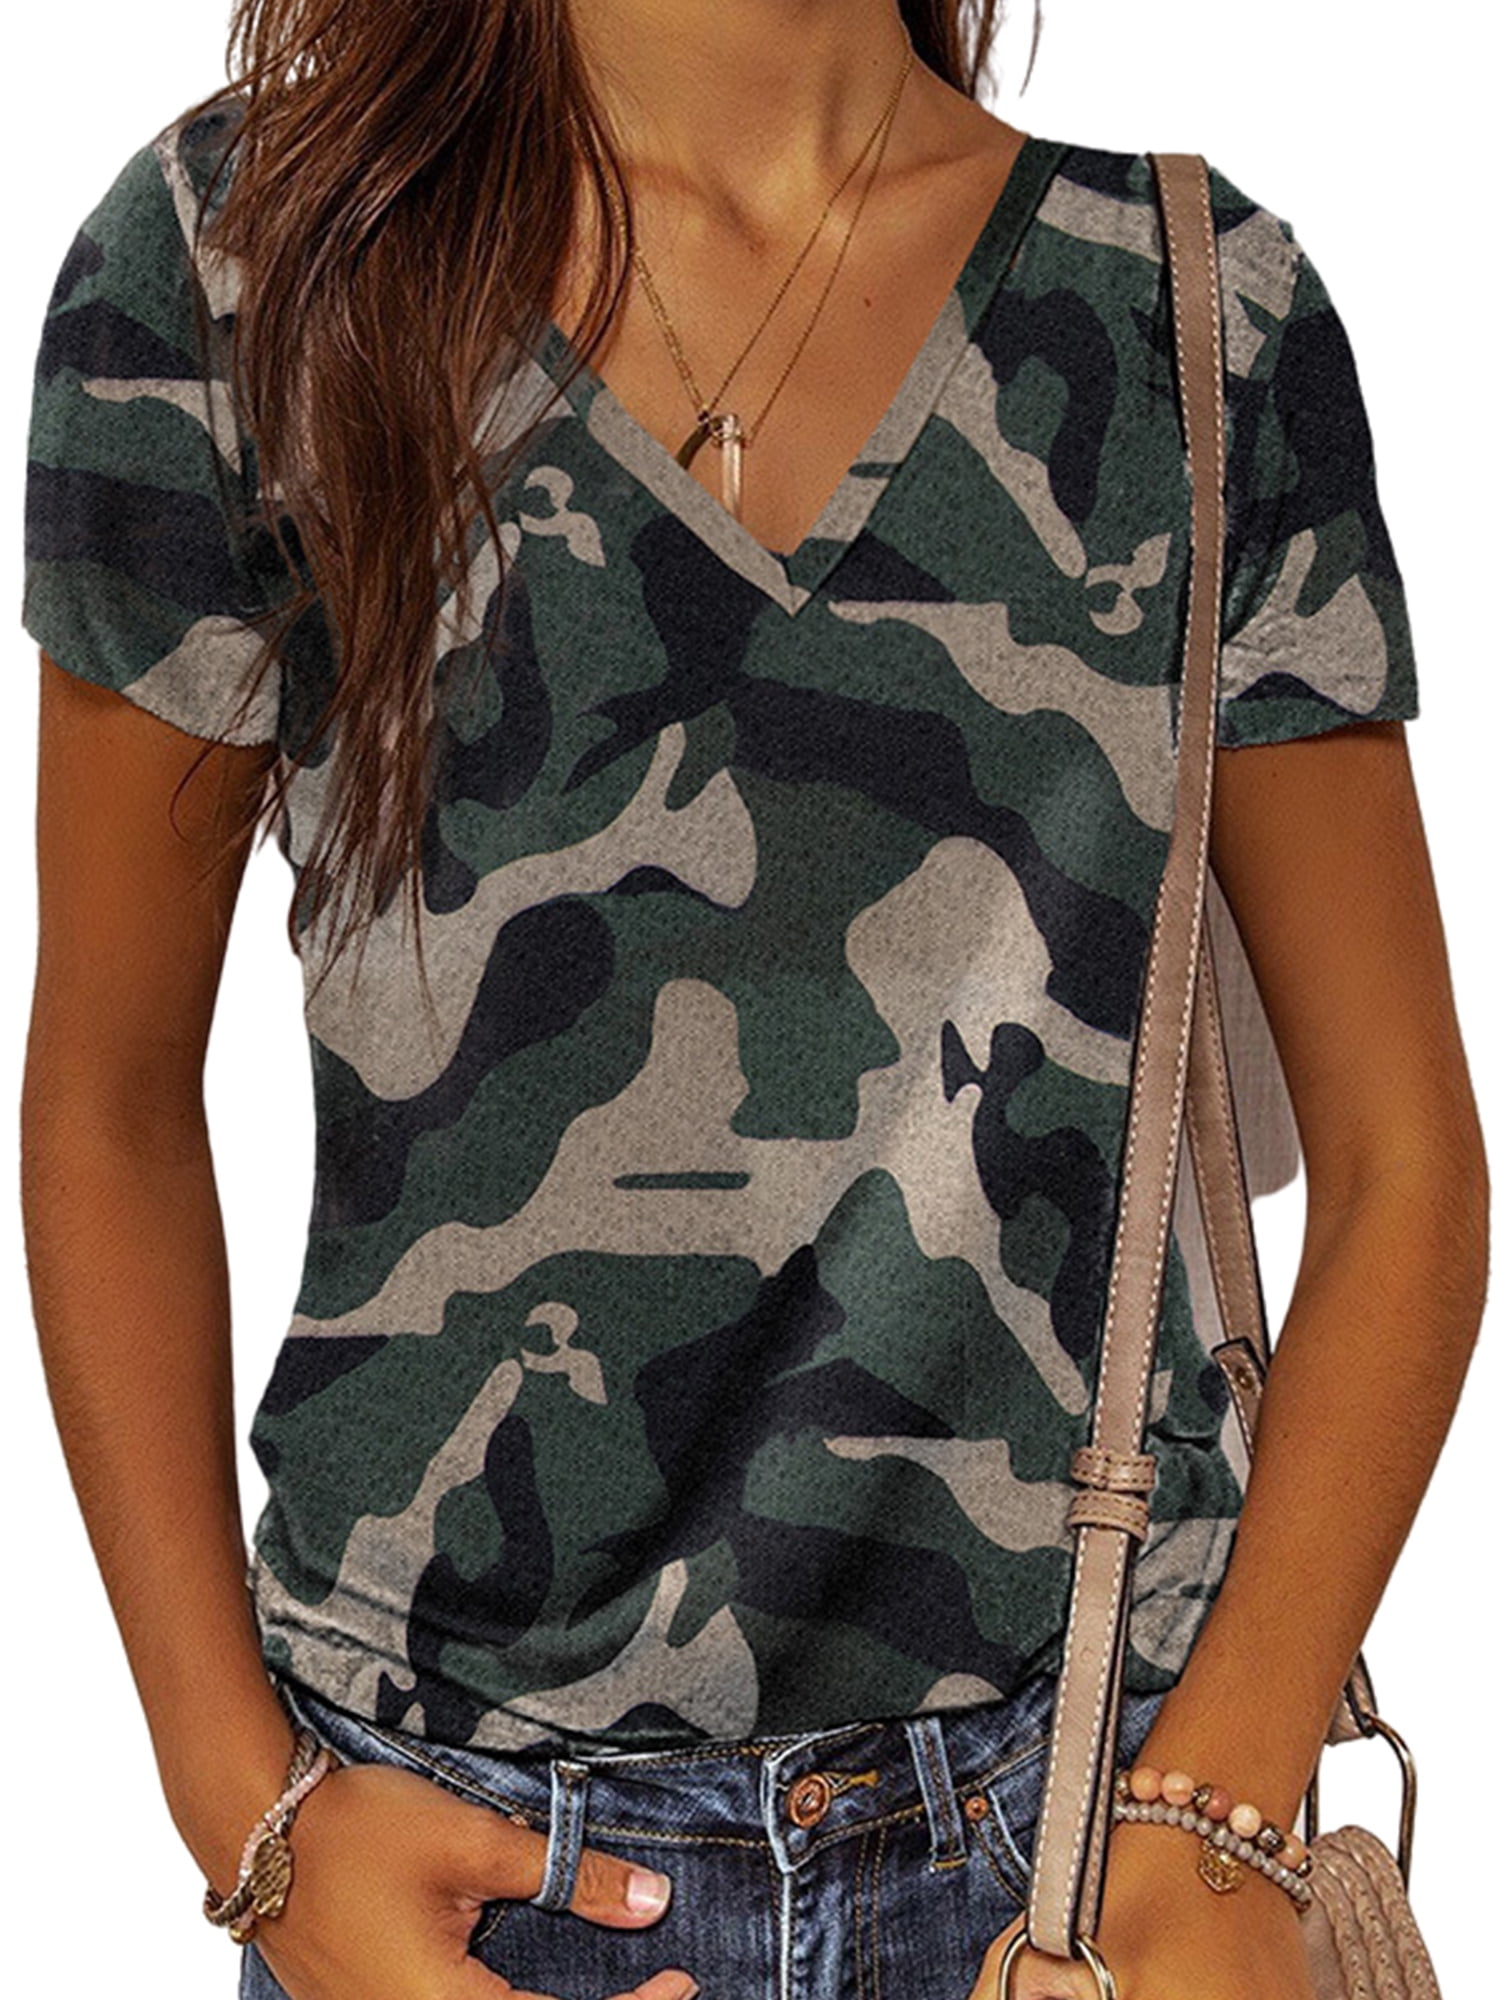 Sexy Ladies Tee Print Tops Short Sleeve T Shirt Fashion T- Basic Loungewear Blouse Army Green XXL Walmart.com